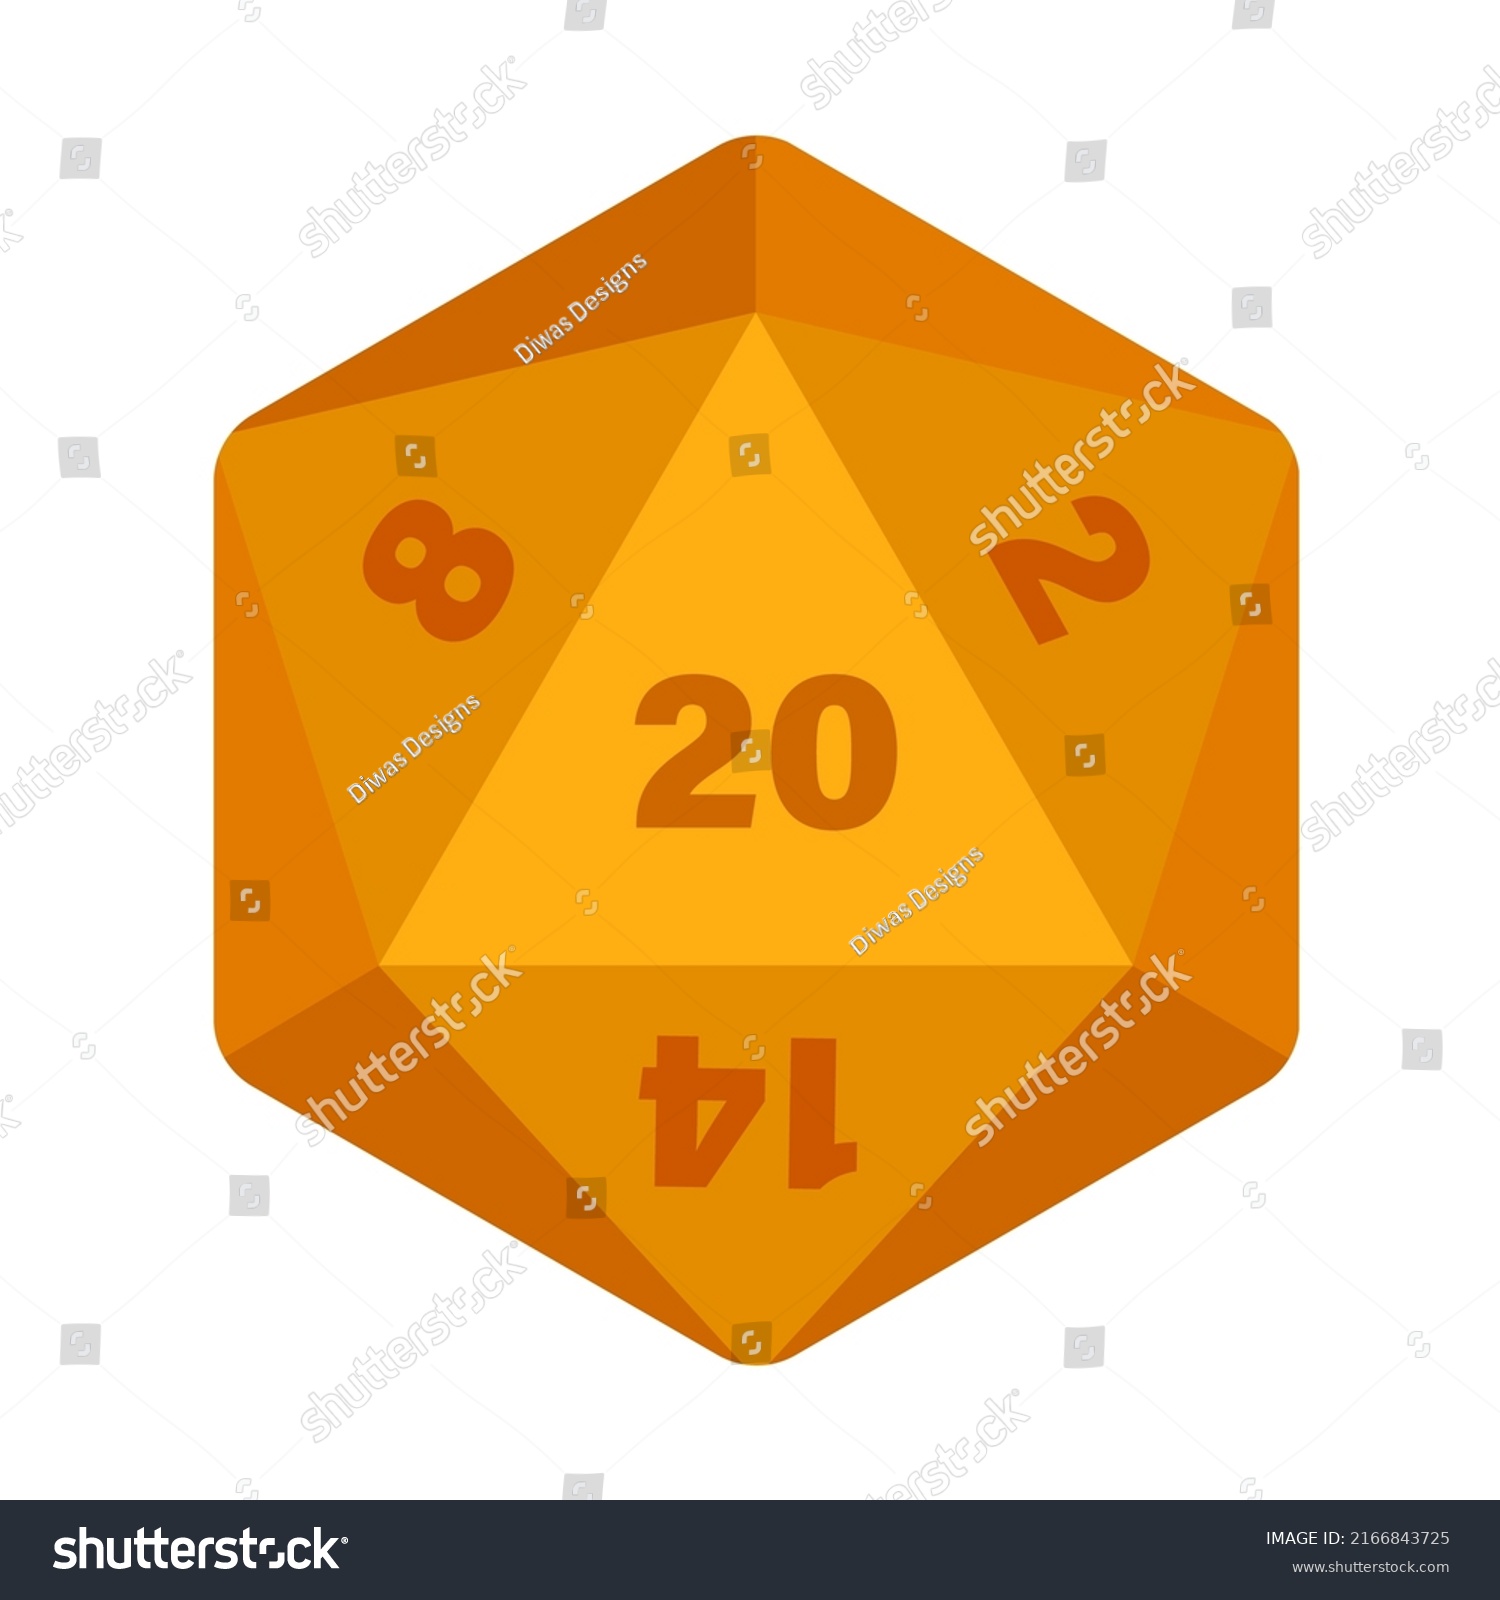 SVG of d20 icosahedron dice vector illustration mtg rpg dice logo icon clipart	
 svg